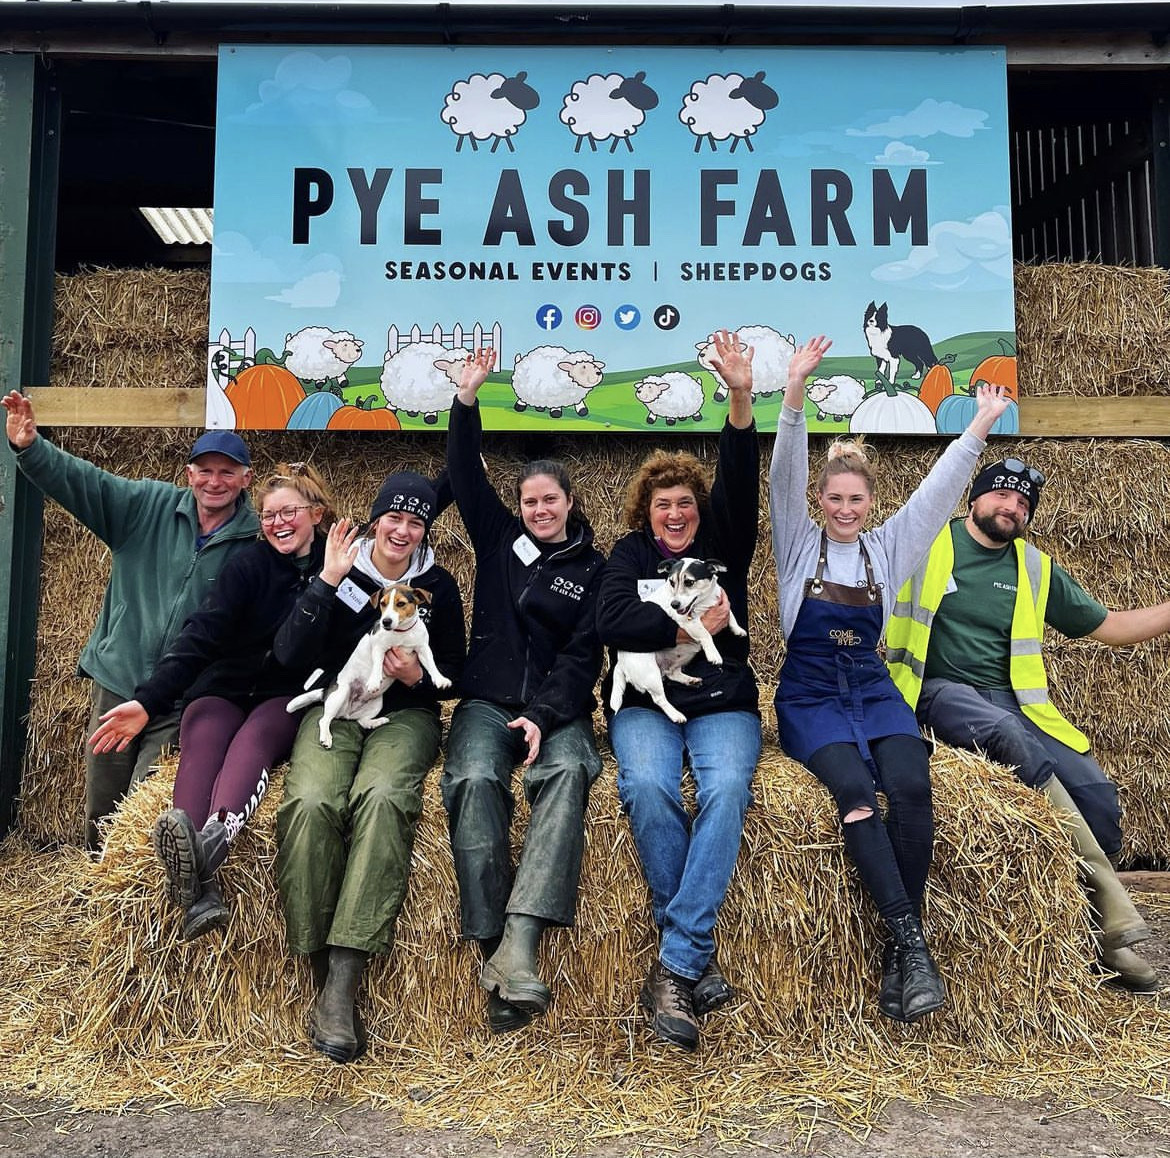 Pye Ash Farm supports the Hospice